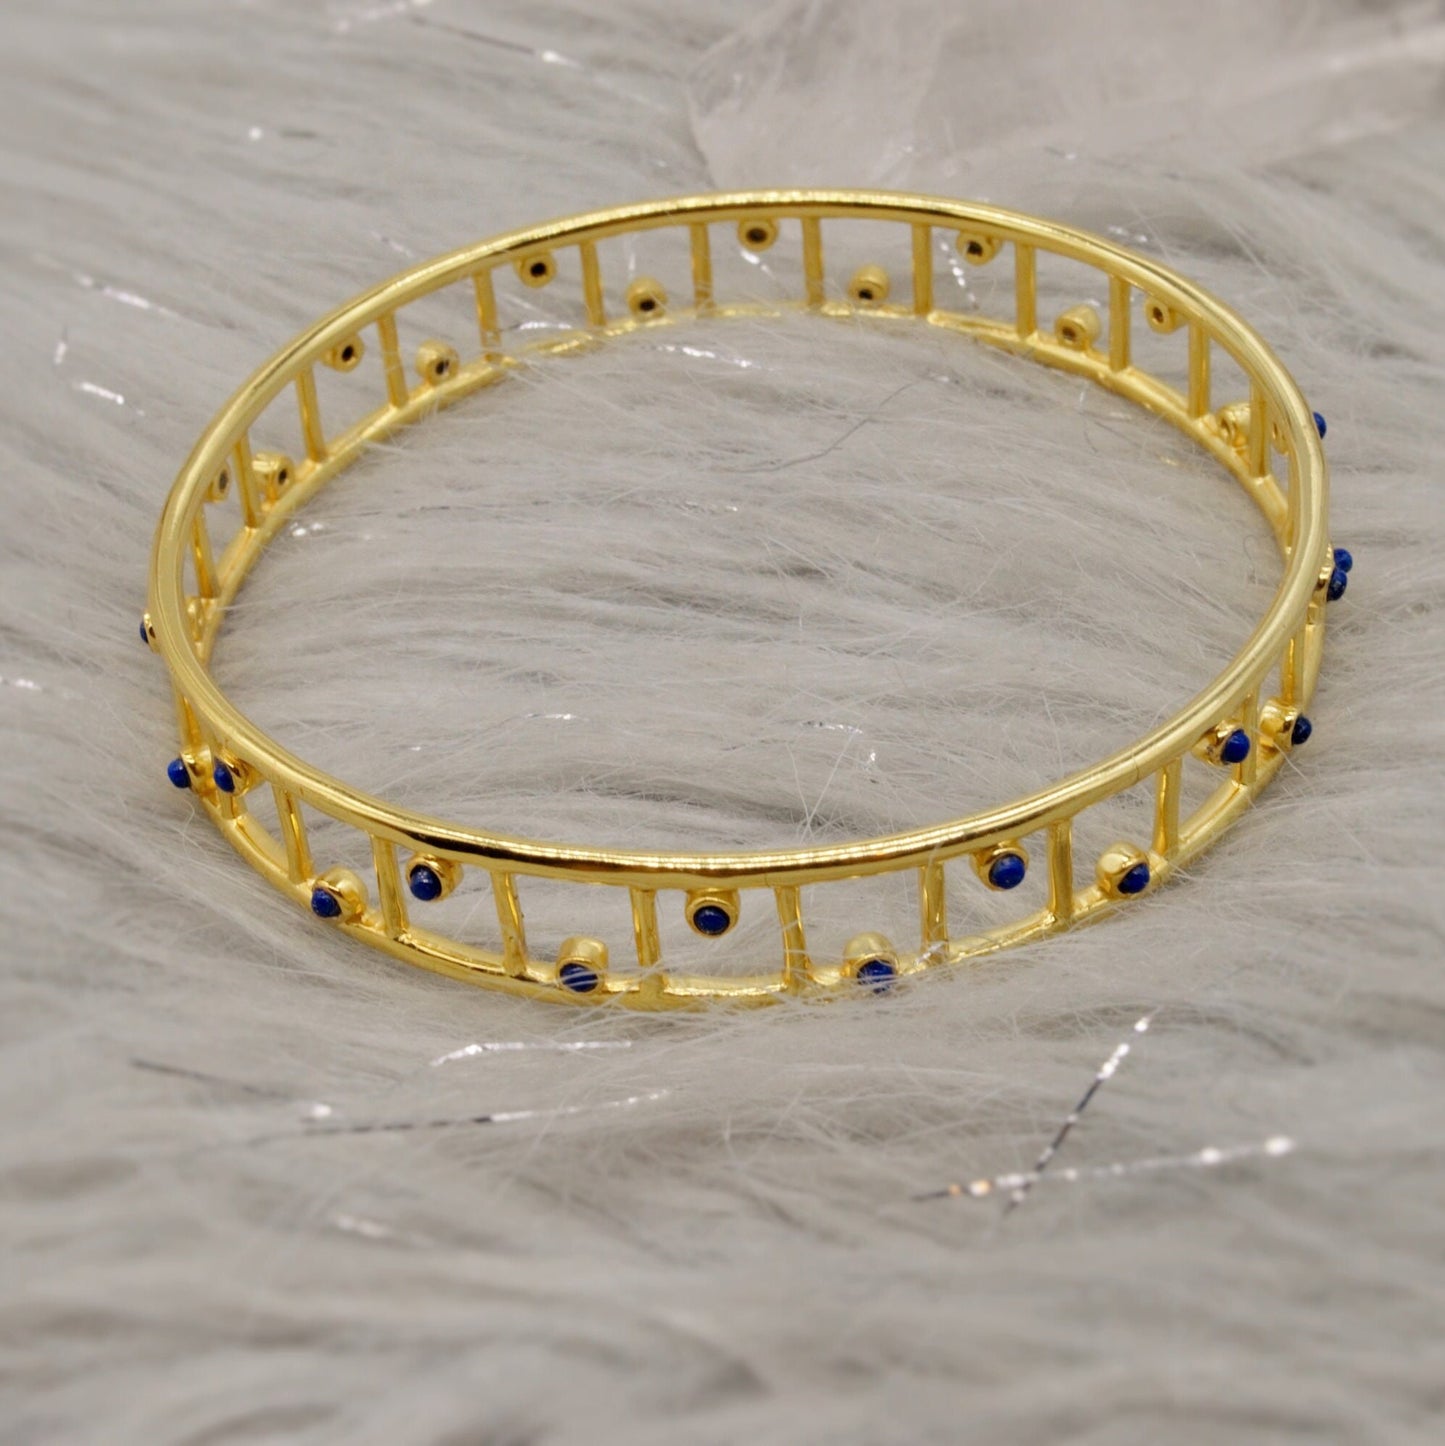 Lapis Lazuli Gold Bangle Bracelet, Lapis Jewelry, December Birthstone Bracelet, Indian Bangles For Women, Gifts For Her, UK size 6.5cm